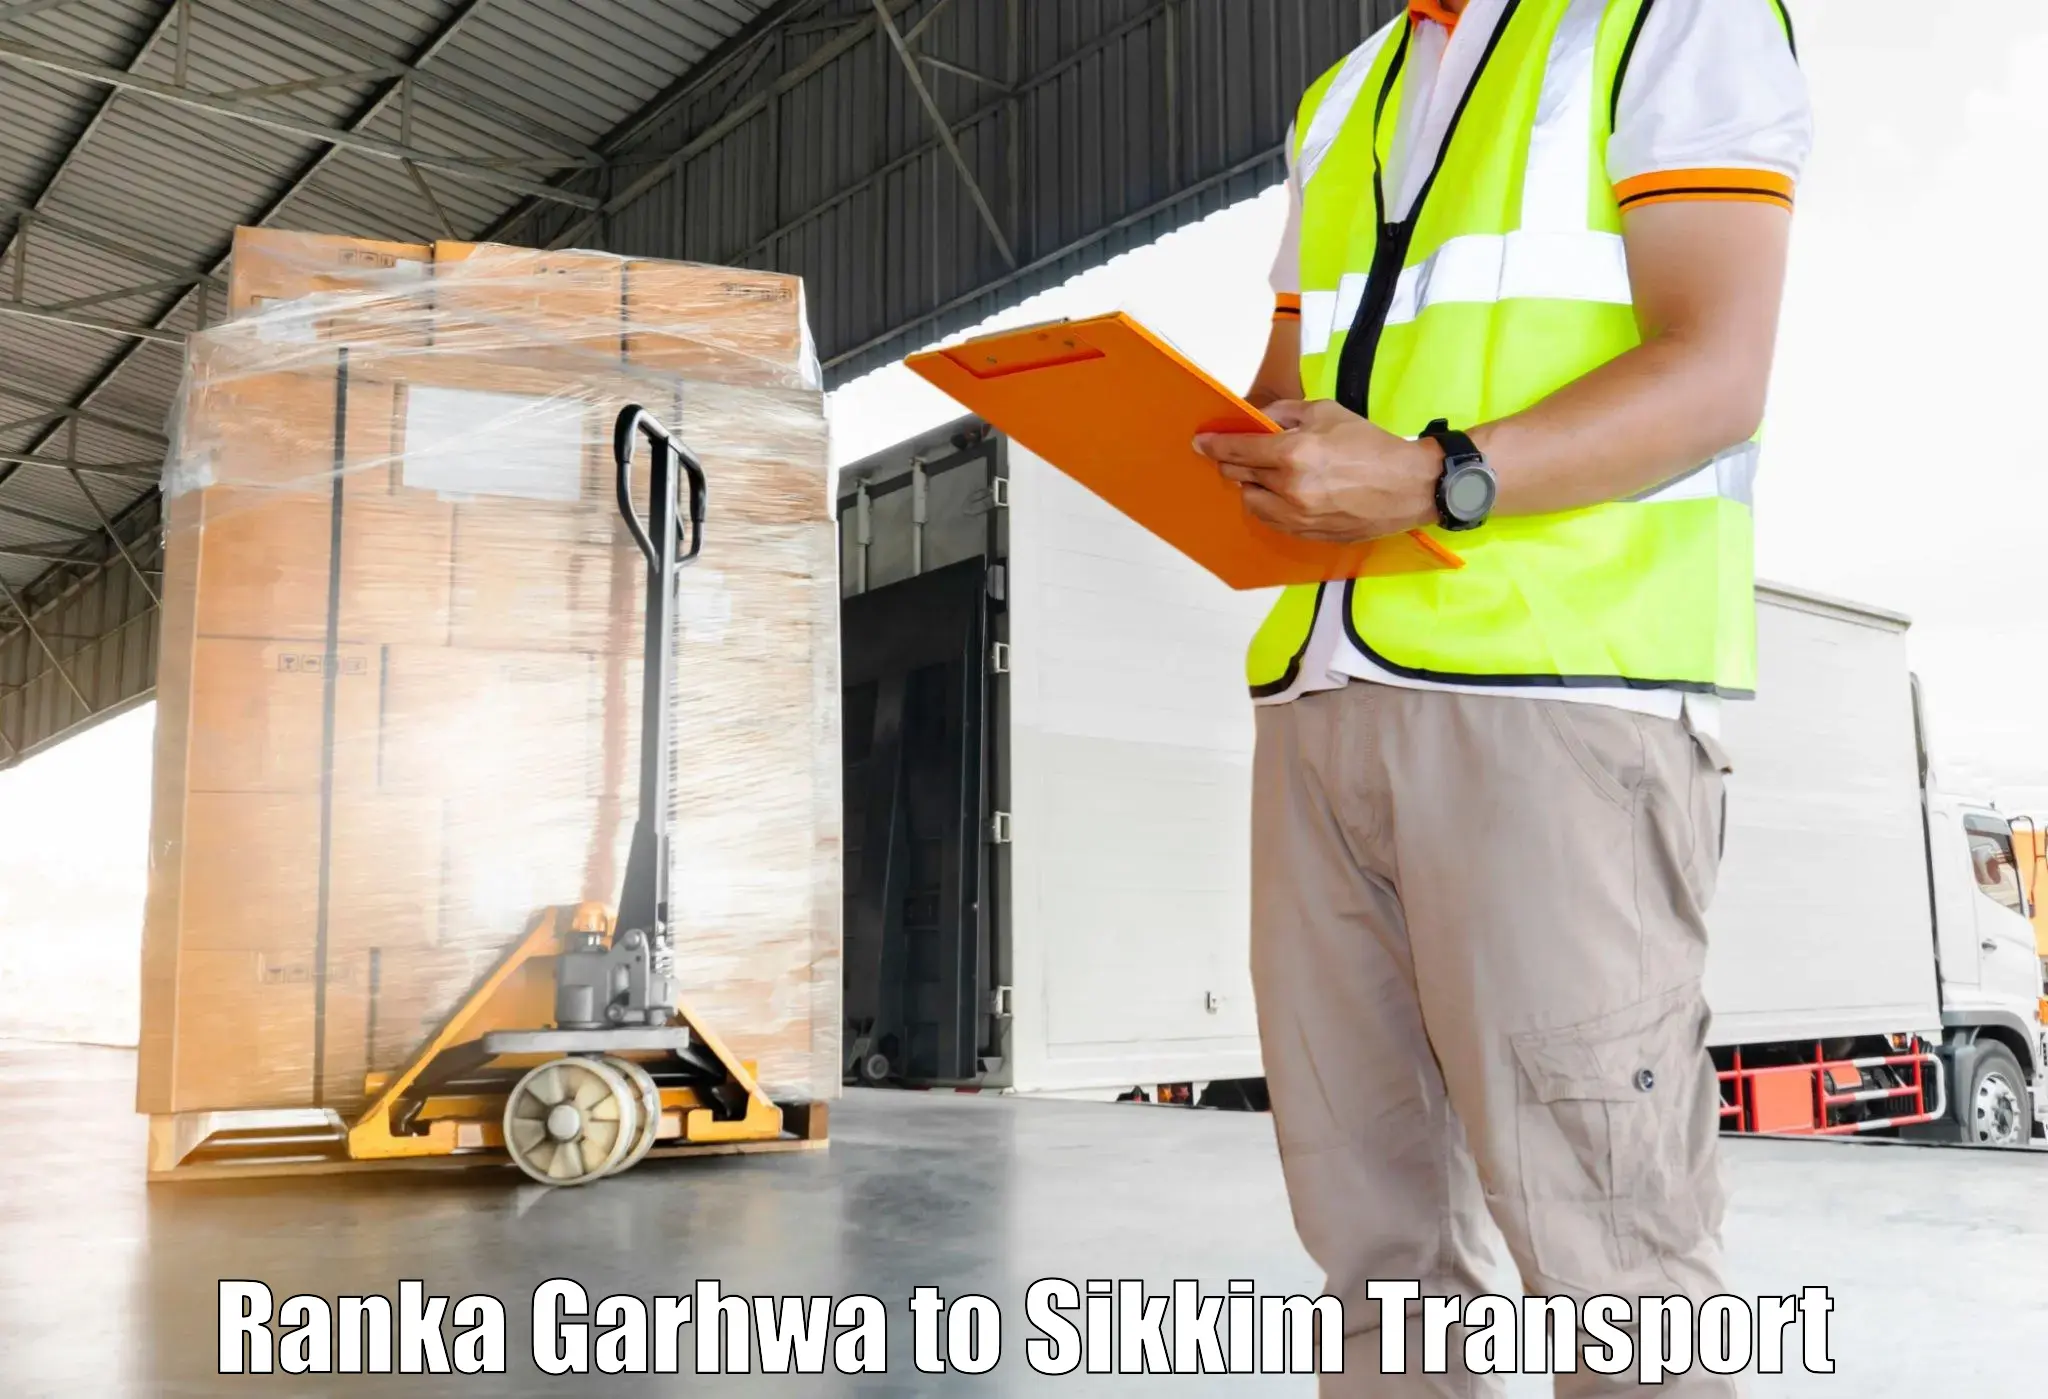 Transport in sharing in Ranka Garhwa to Singtam